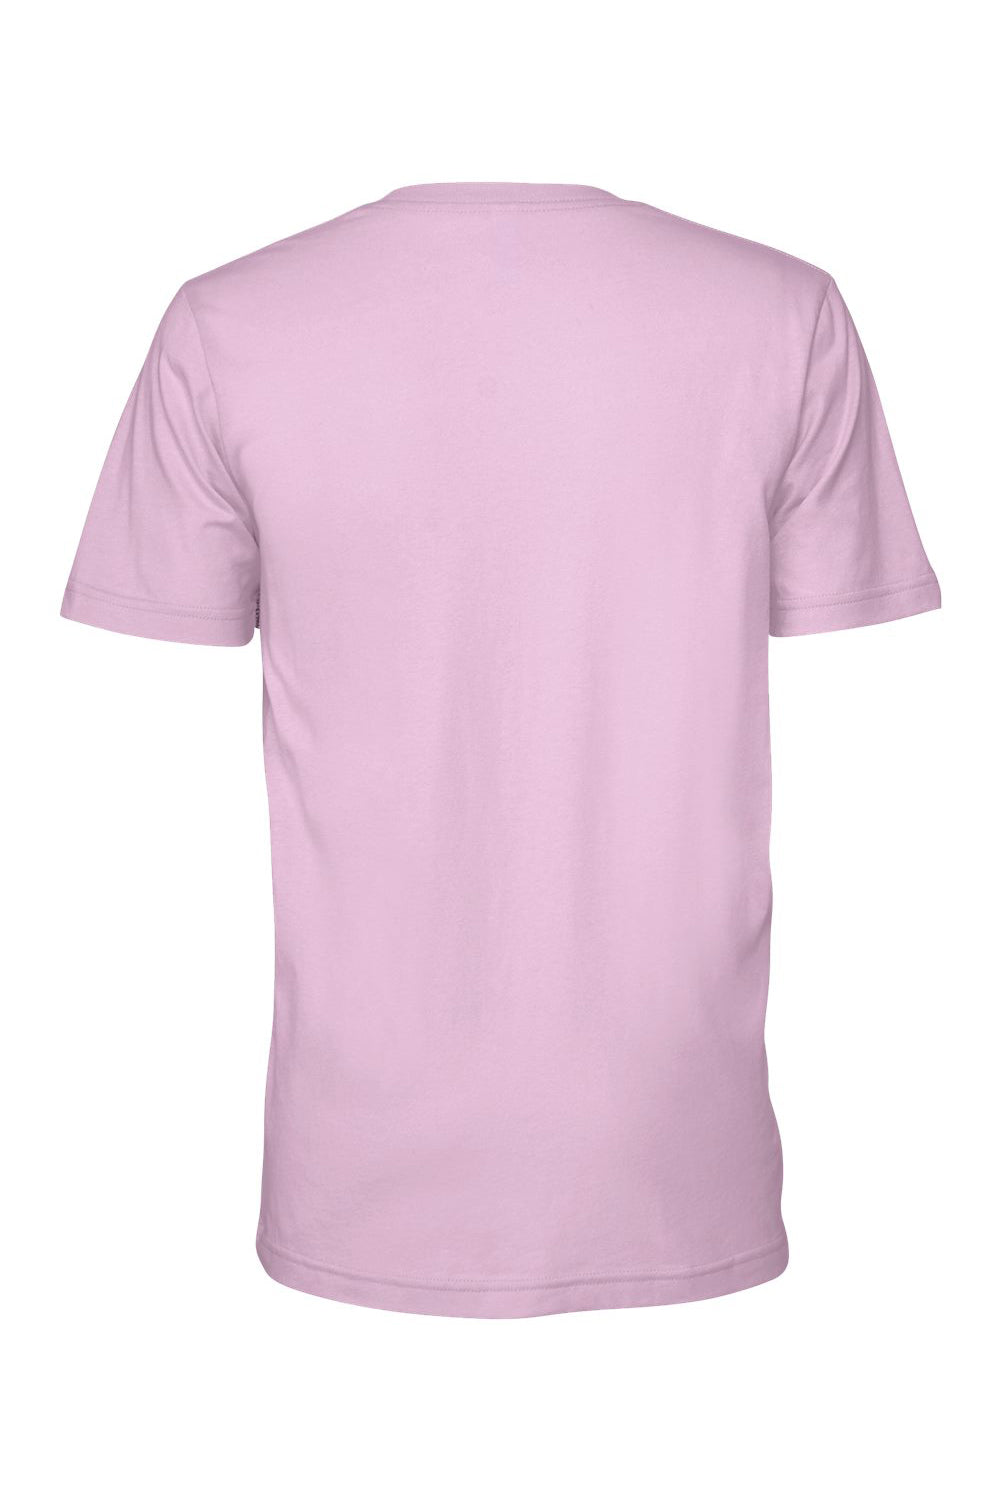 Bella + Canvas BC3001/3001C Mens Jersey Short Sleeve Crewneck T-Shirt Lilac Pink Flat Back